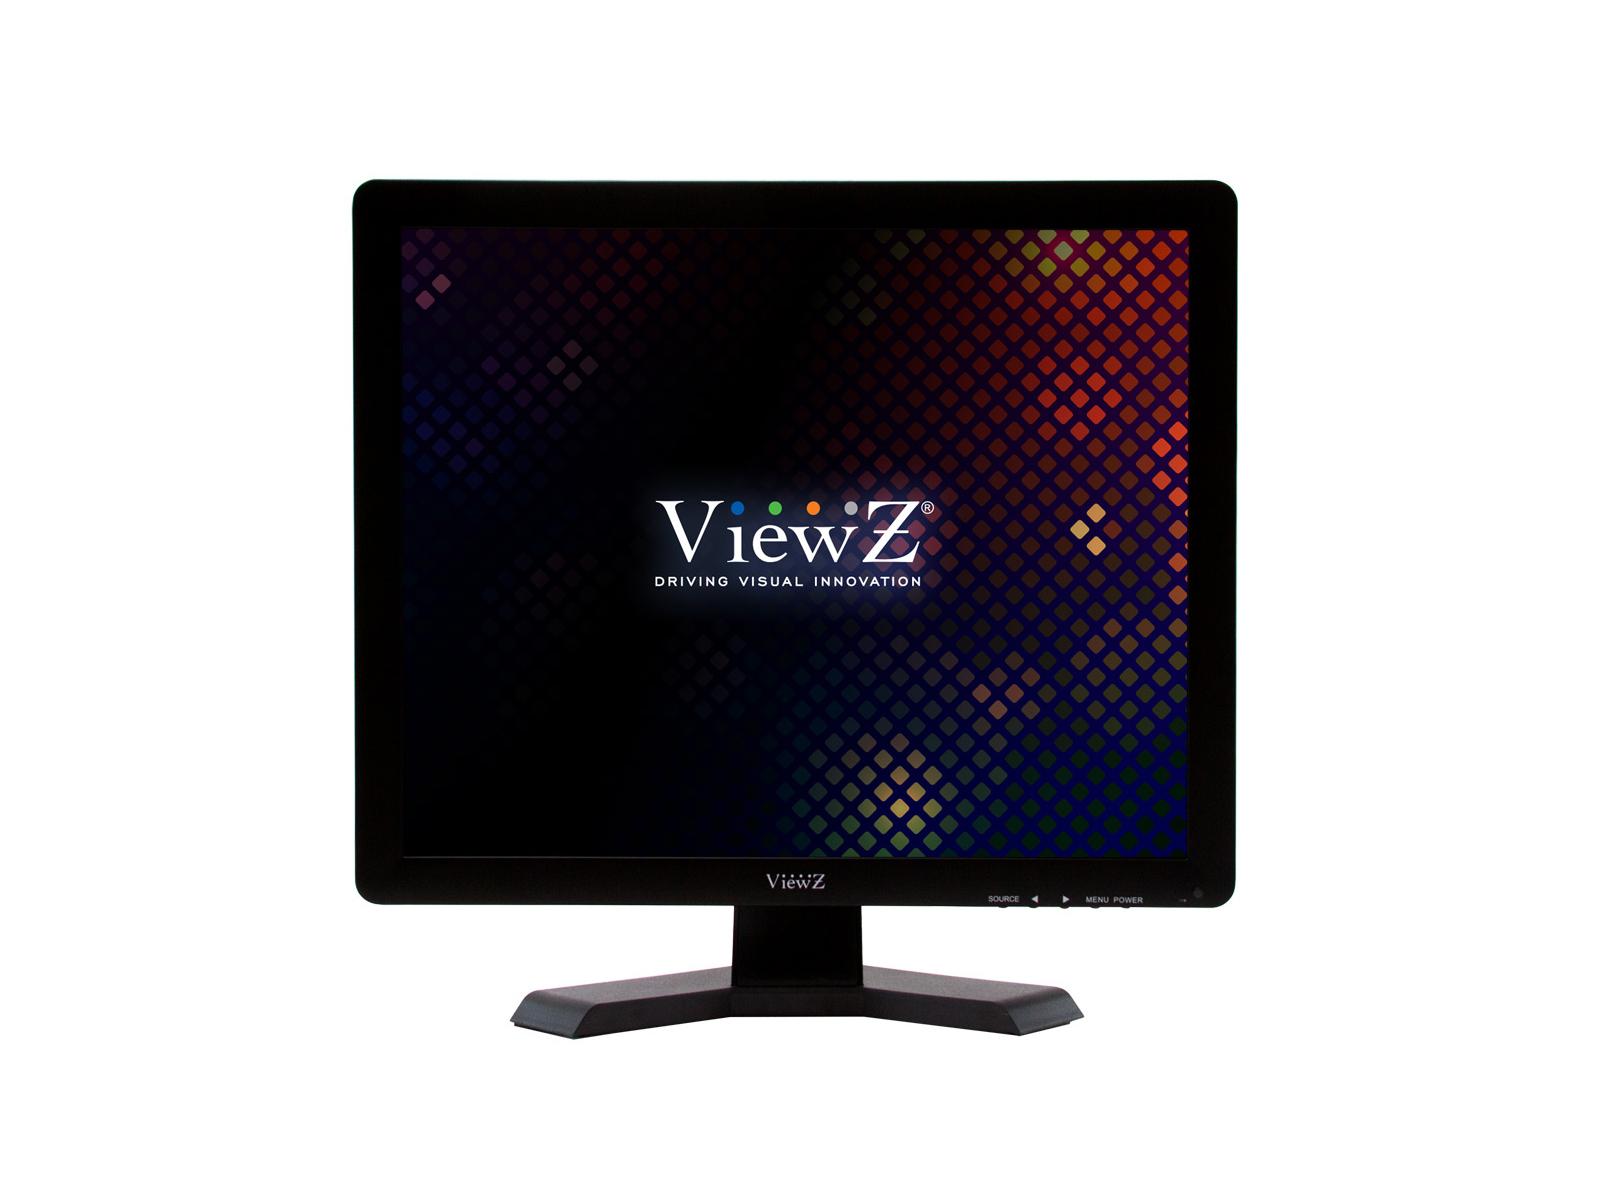 VZ-19RTN 19 inch 1280x1024 HDMI/VGA Professional LED CCTV Monitor by ViewZ